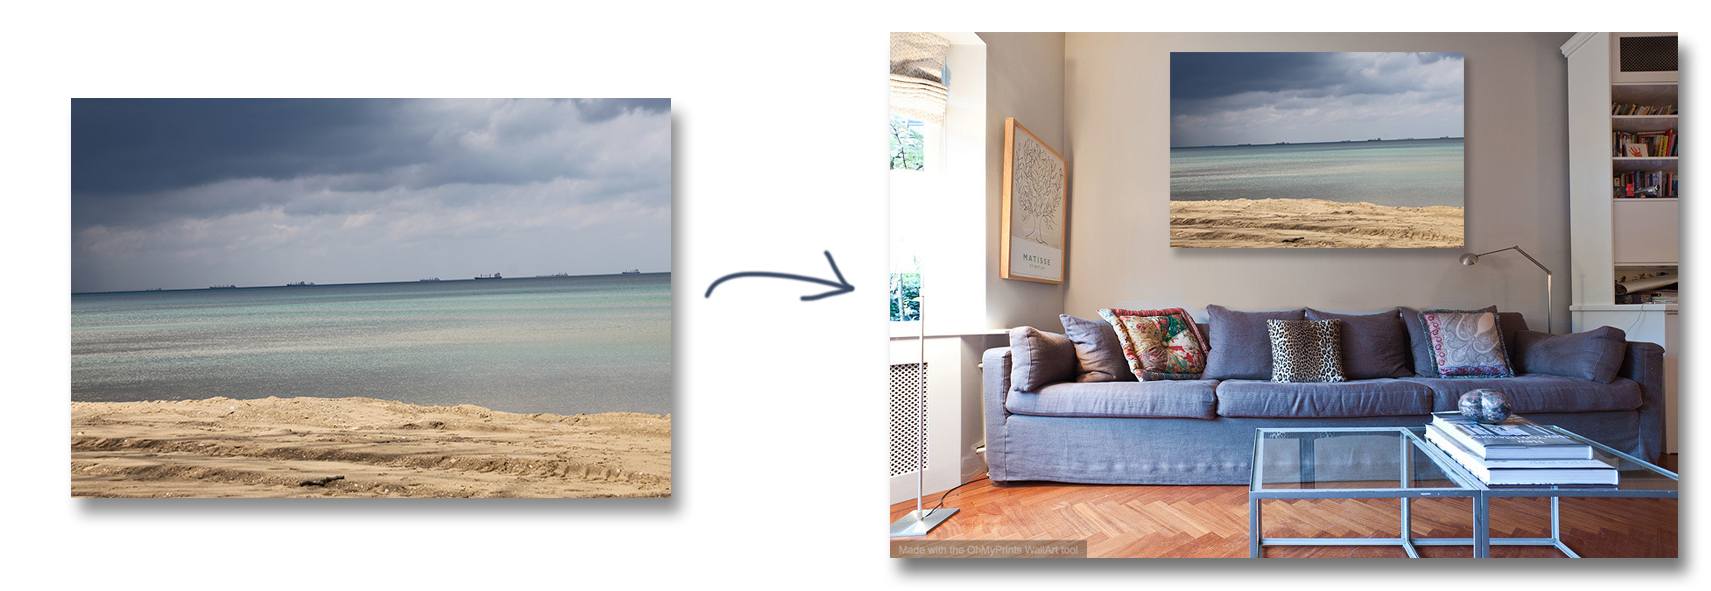 Chamira_Ocean_Art_Livingroom_Example